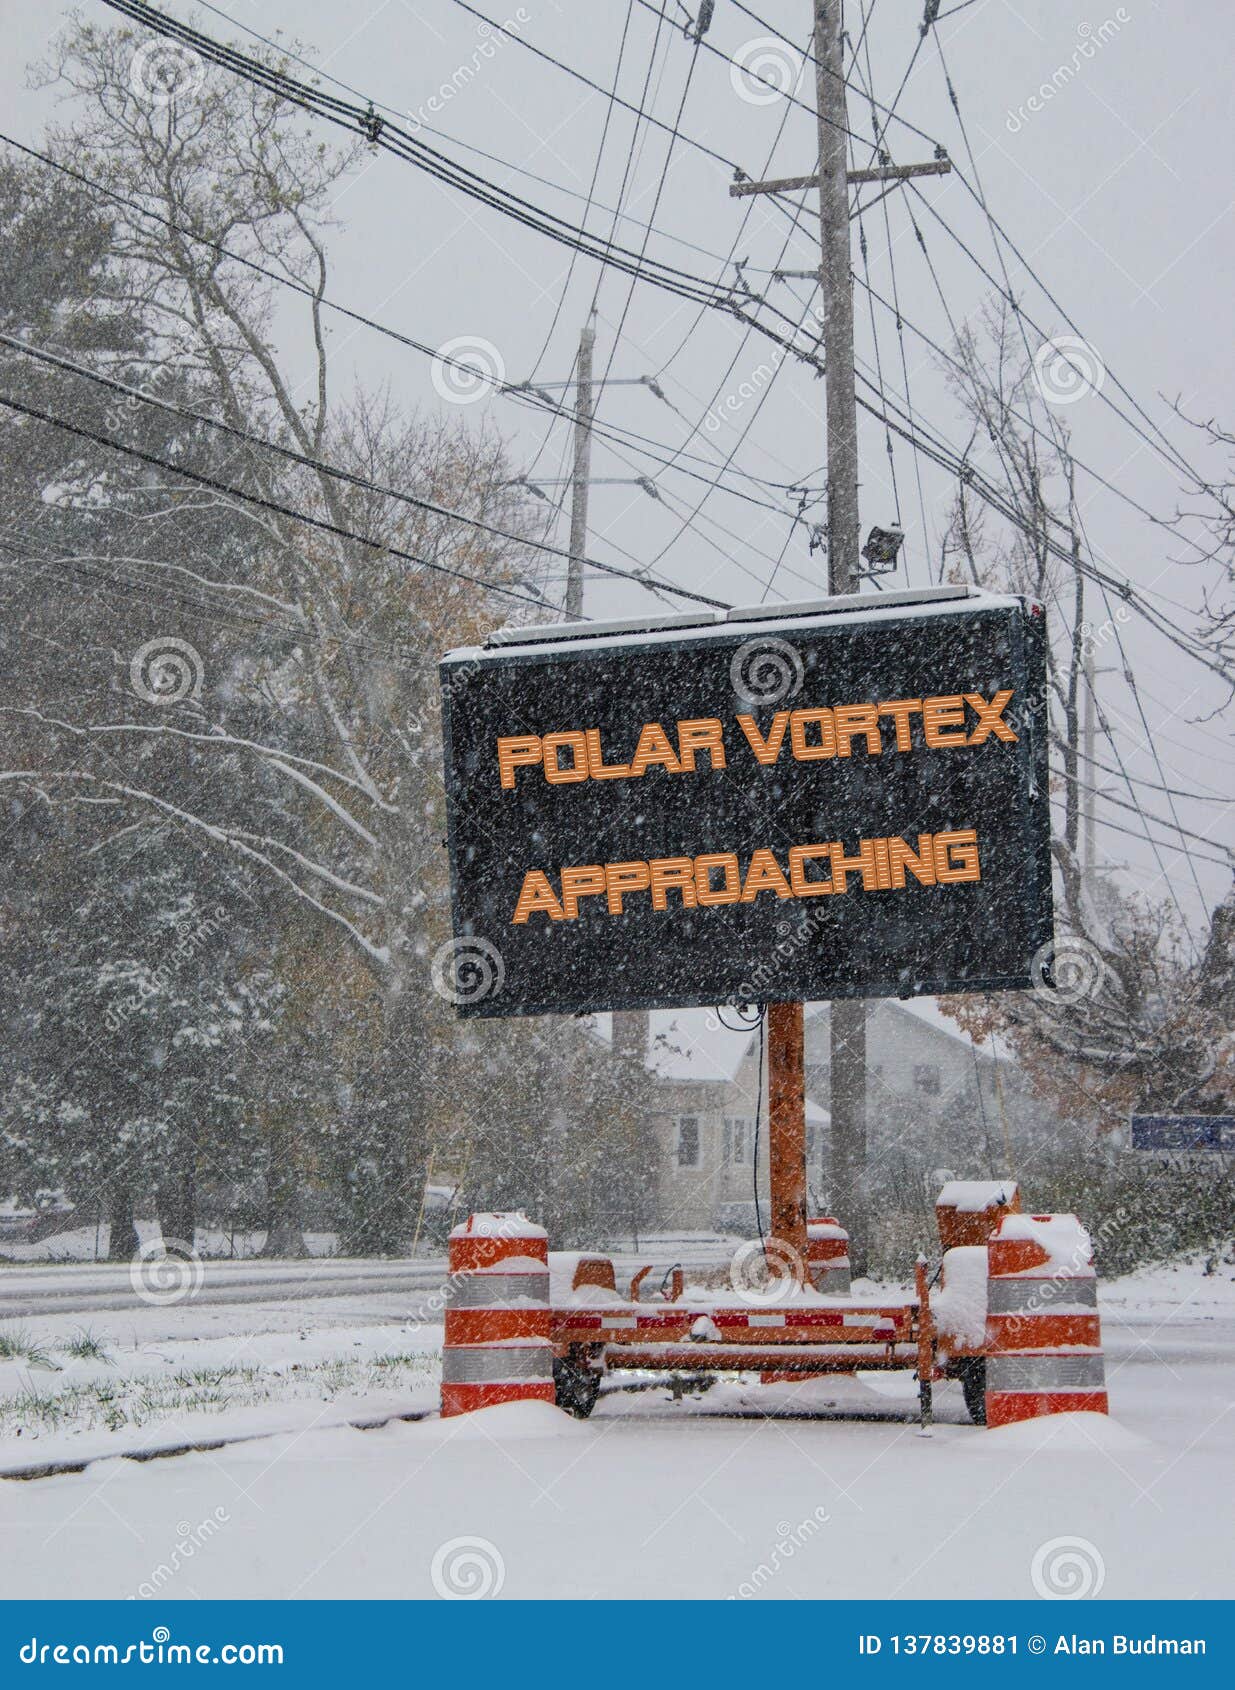 road sign in snow warning of polar vortex